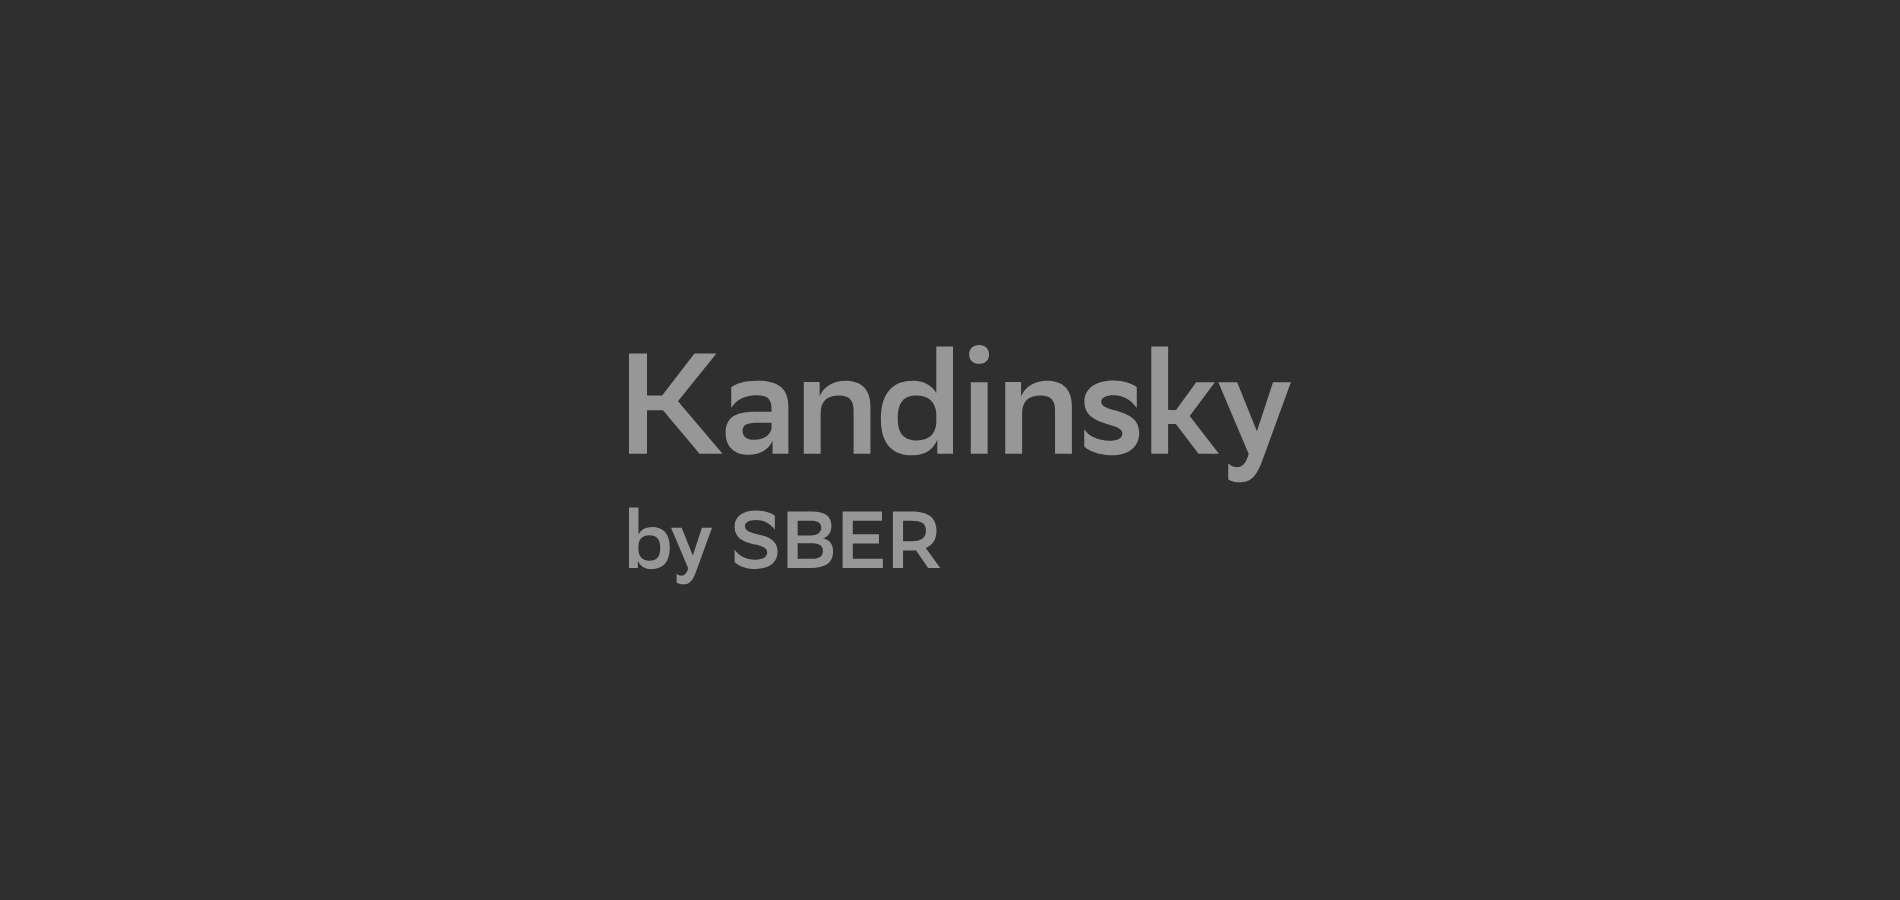 Сбер представил тестовую версию нейромодели Kandinsky Video 1.1